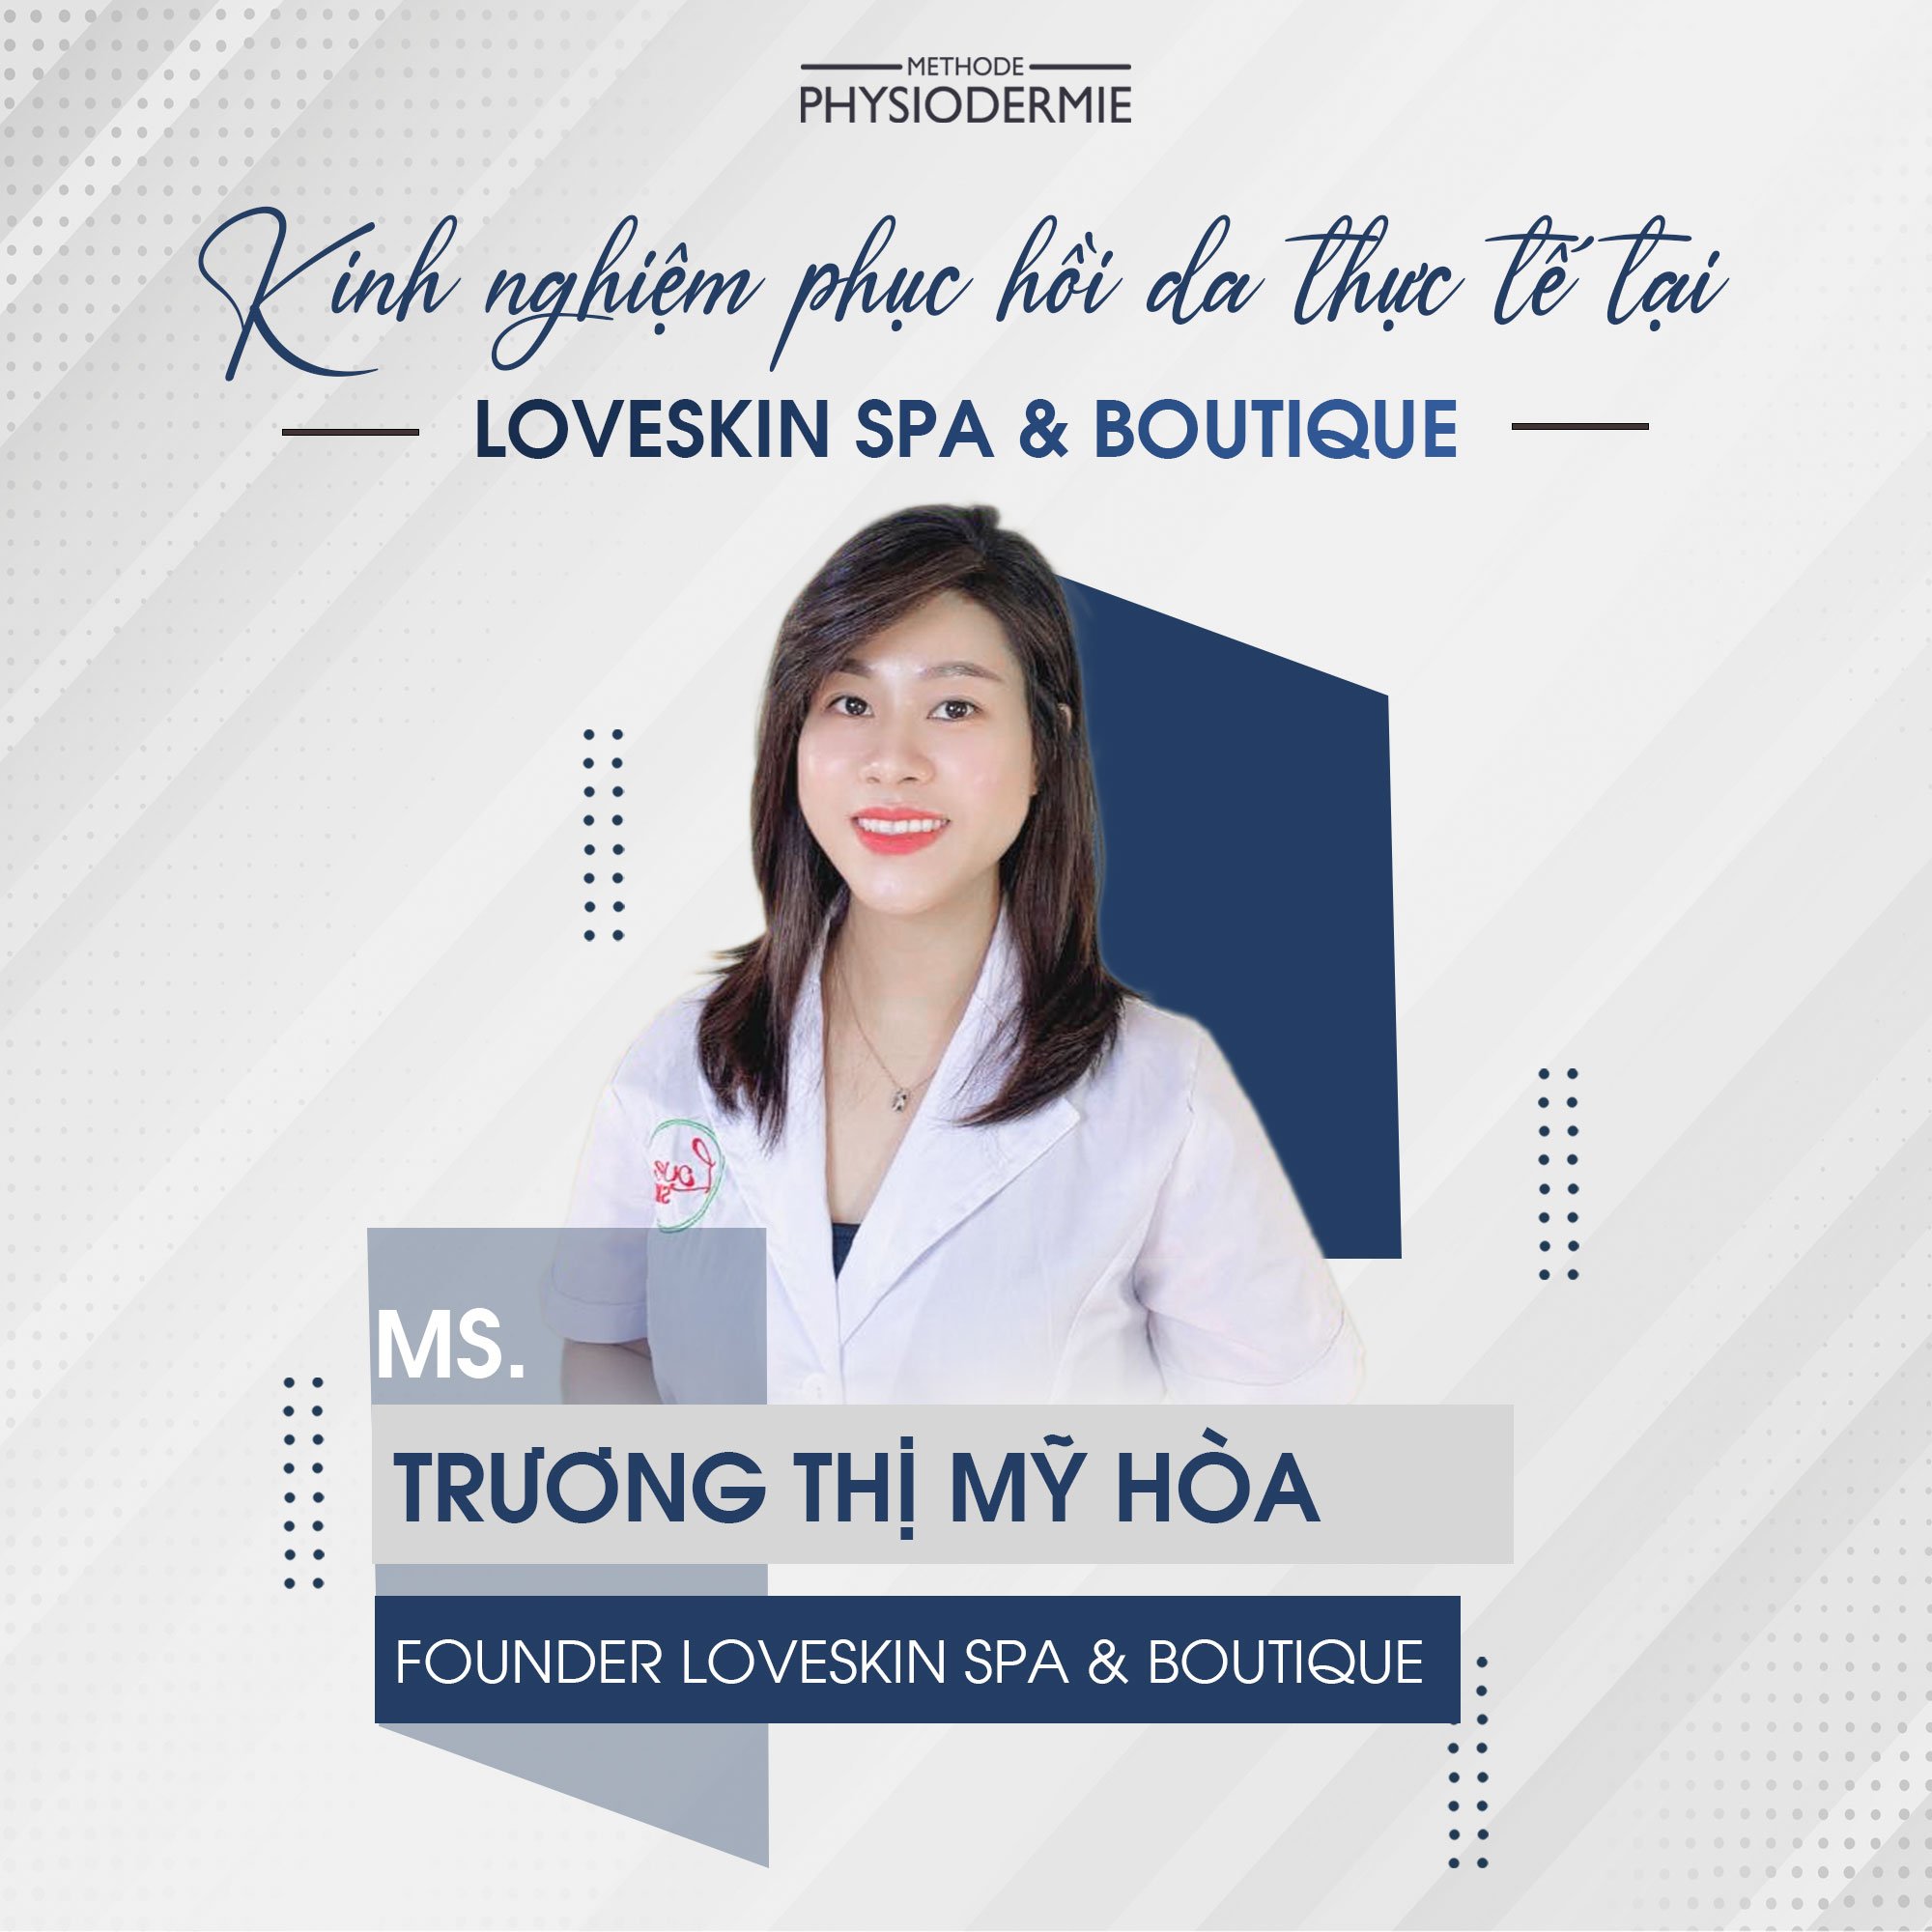 Ms. Trương Thị Mỹ Hòa - Founder LoveSkin Spa & Boutique